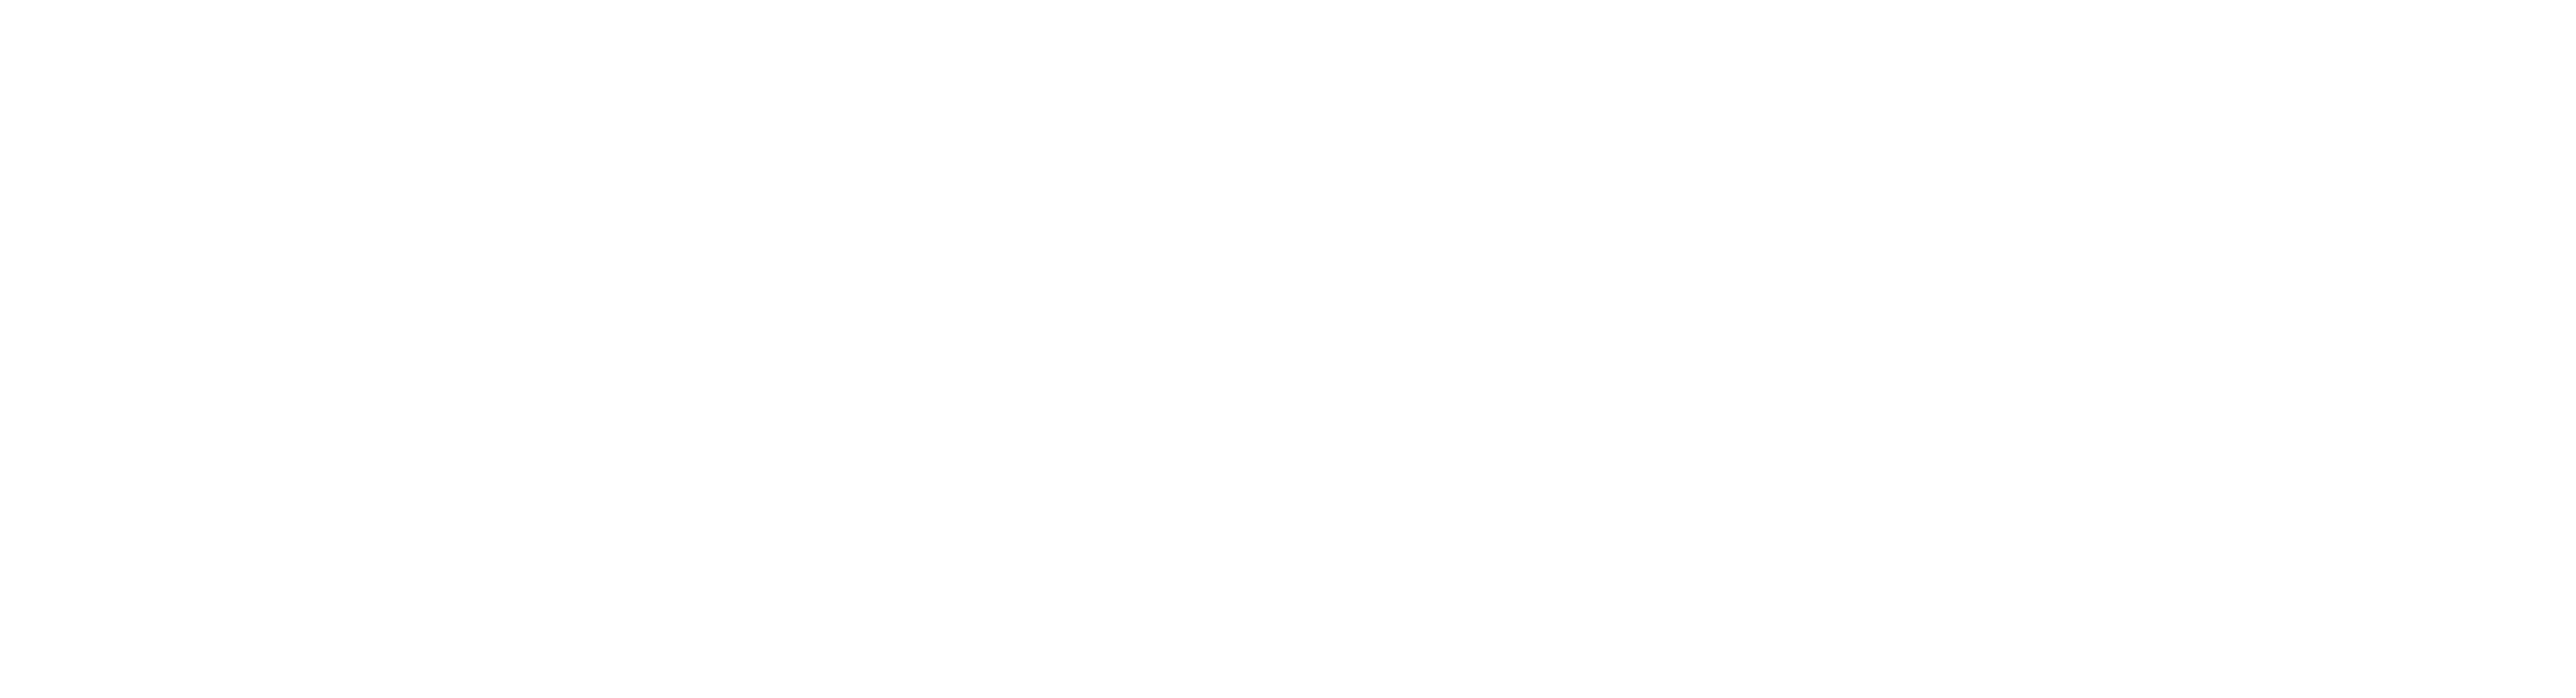 lacosta_logo-1